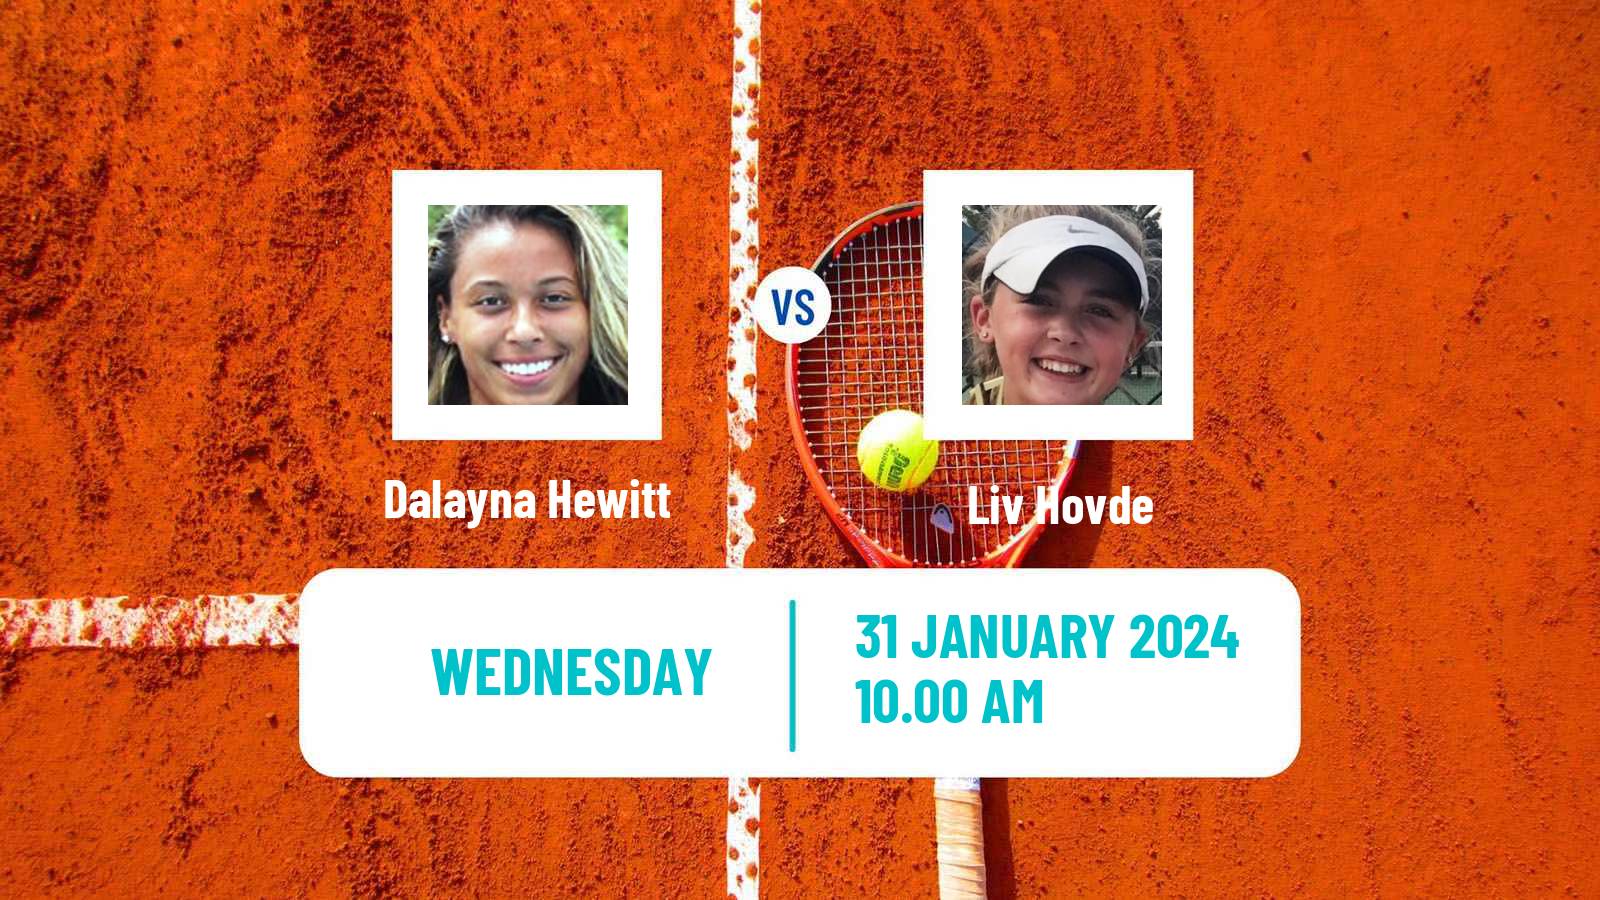 Tennis ITF W75 Rome Ga Women Dalayna Hewitt - Liv Hovde